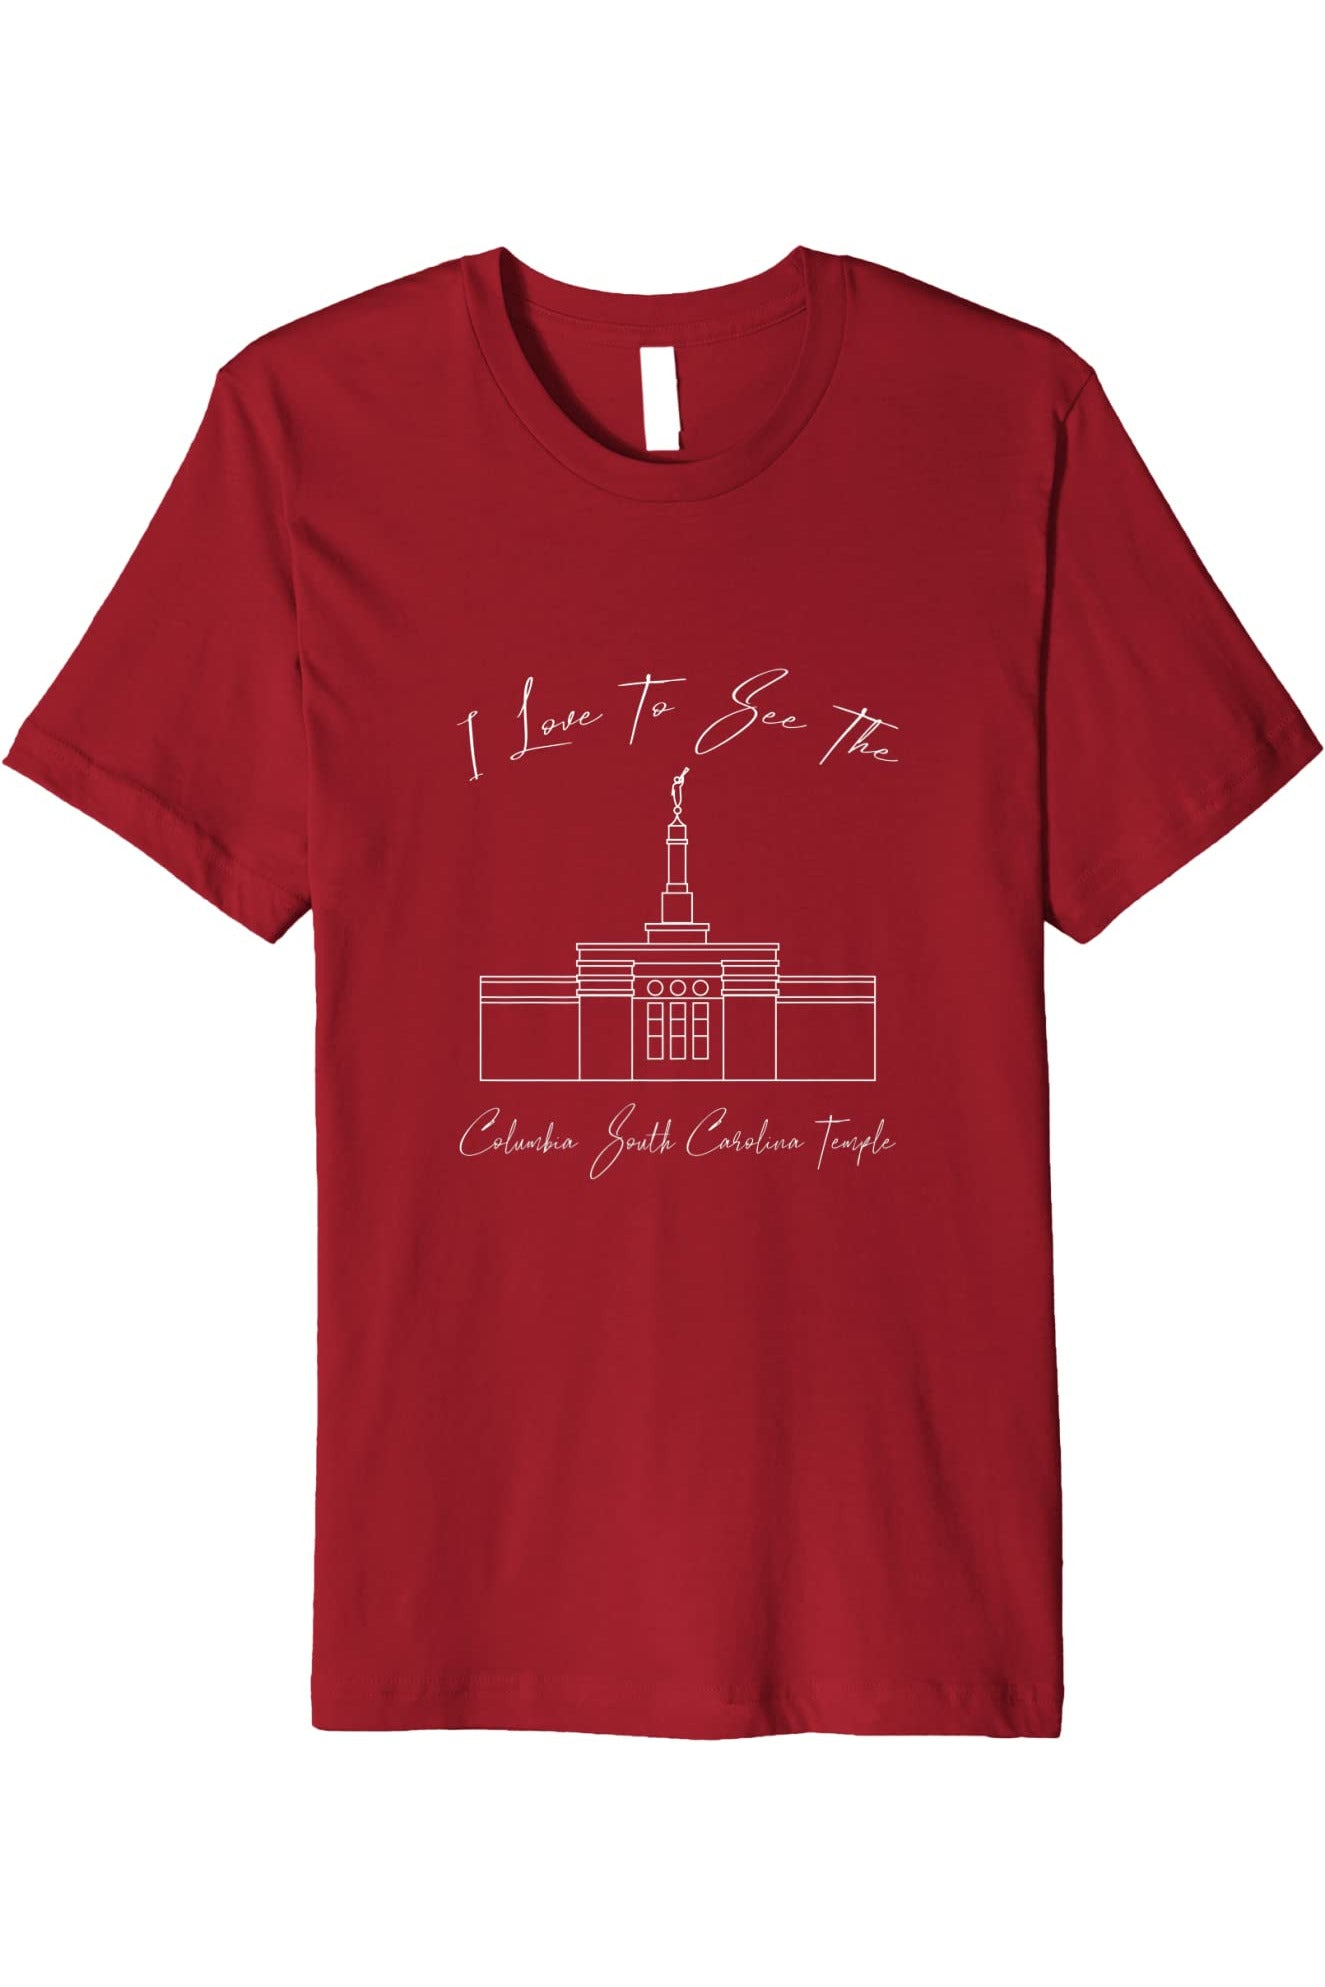 Columbia South Carolina Temple T-Shirt - Premium - Calligraphy Style (English) US